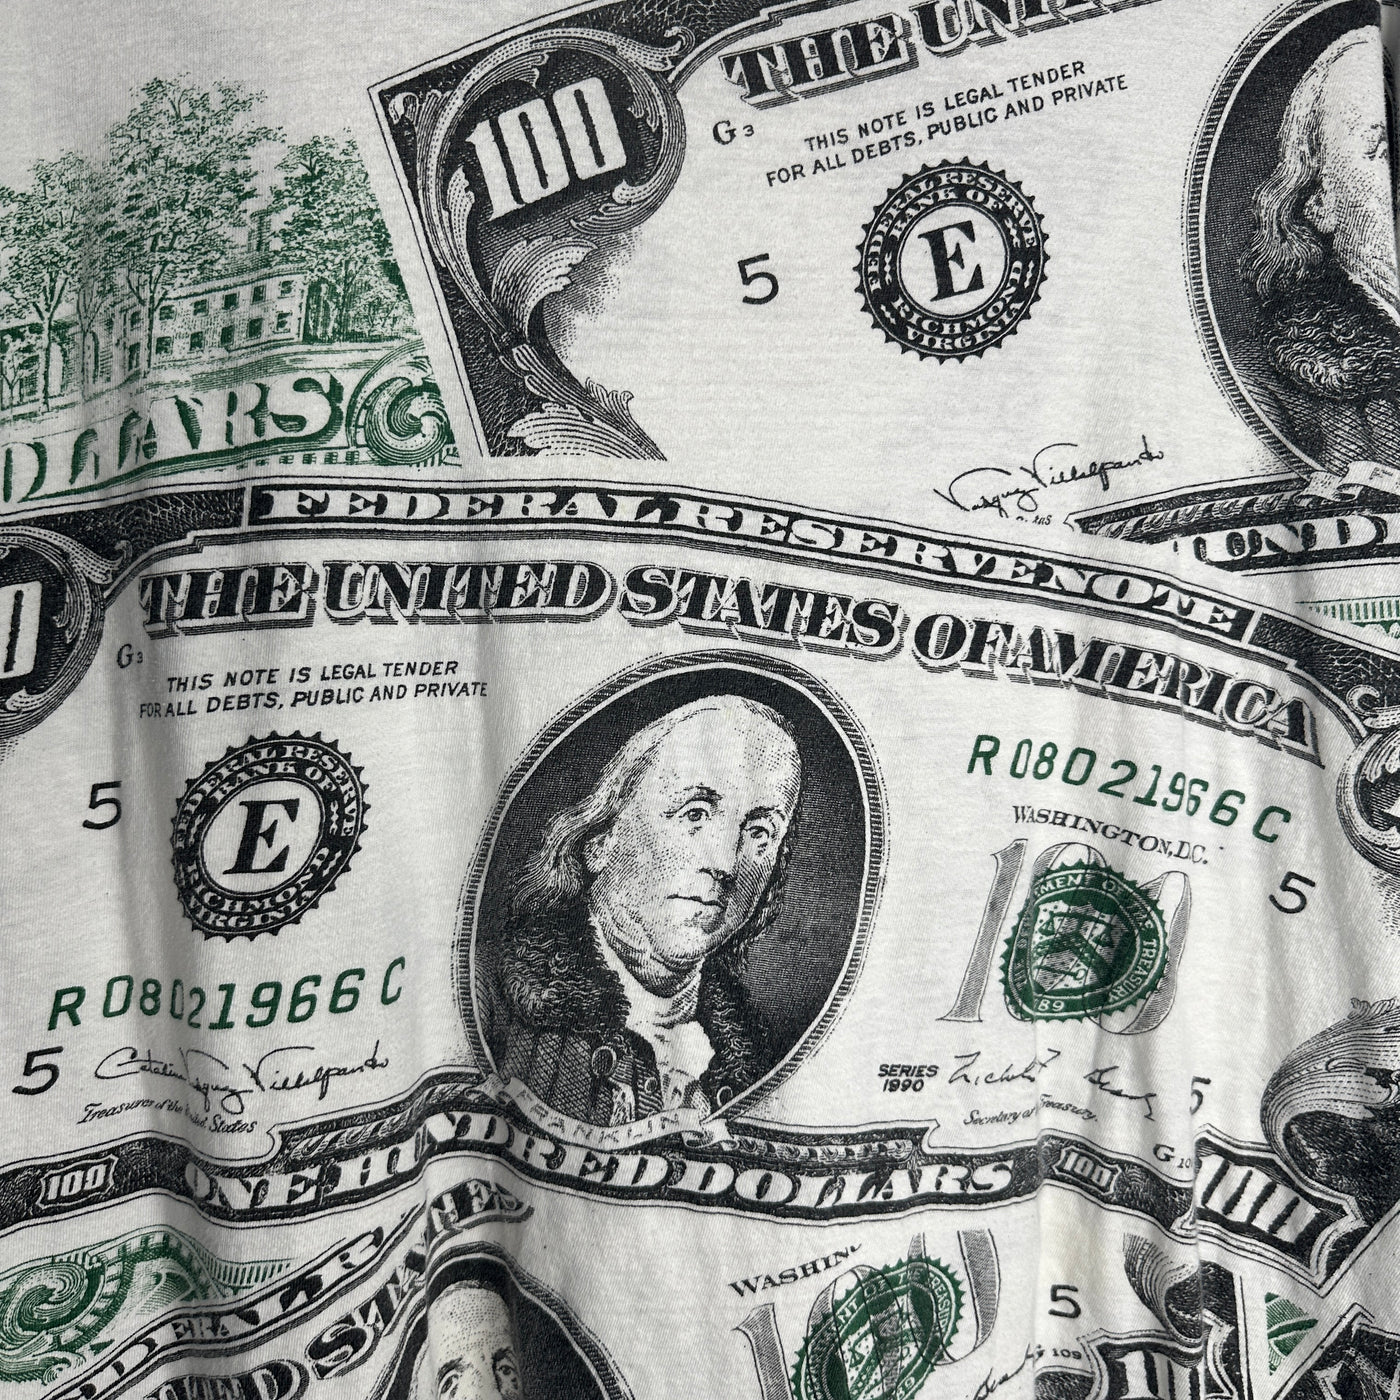 90's 100 Dollar Bills All Over Graphic T-shirt sz 2XL